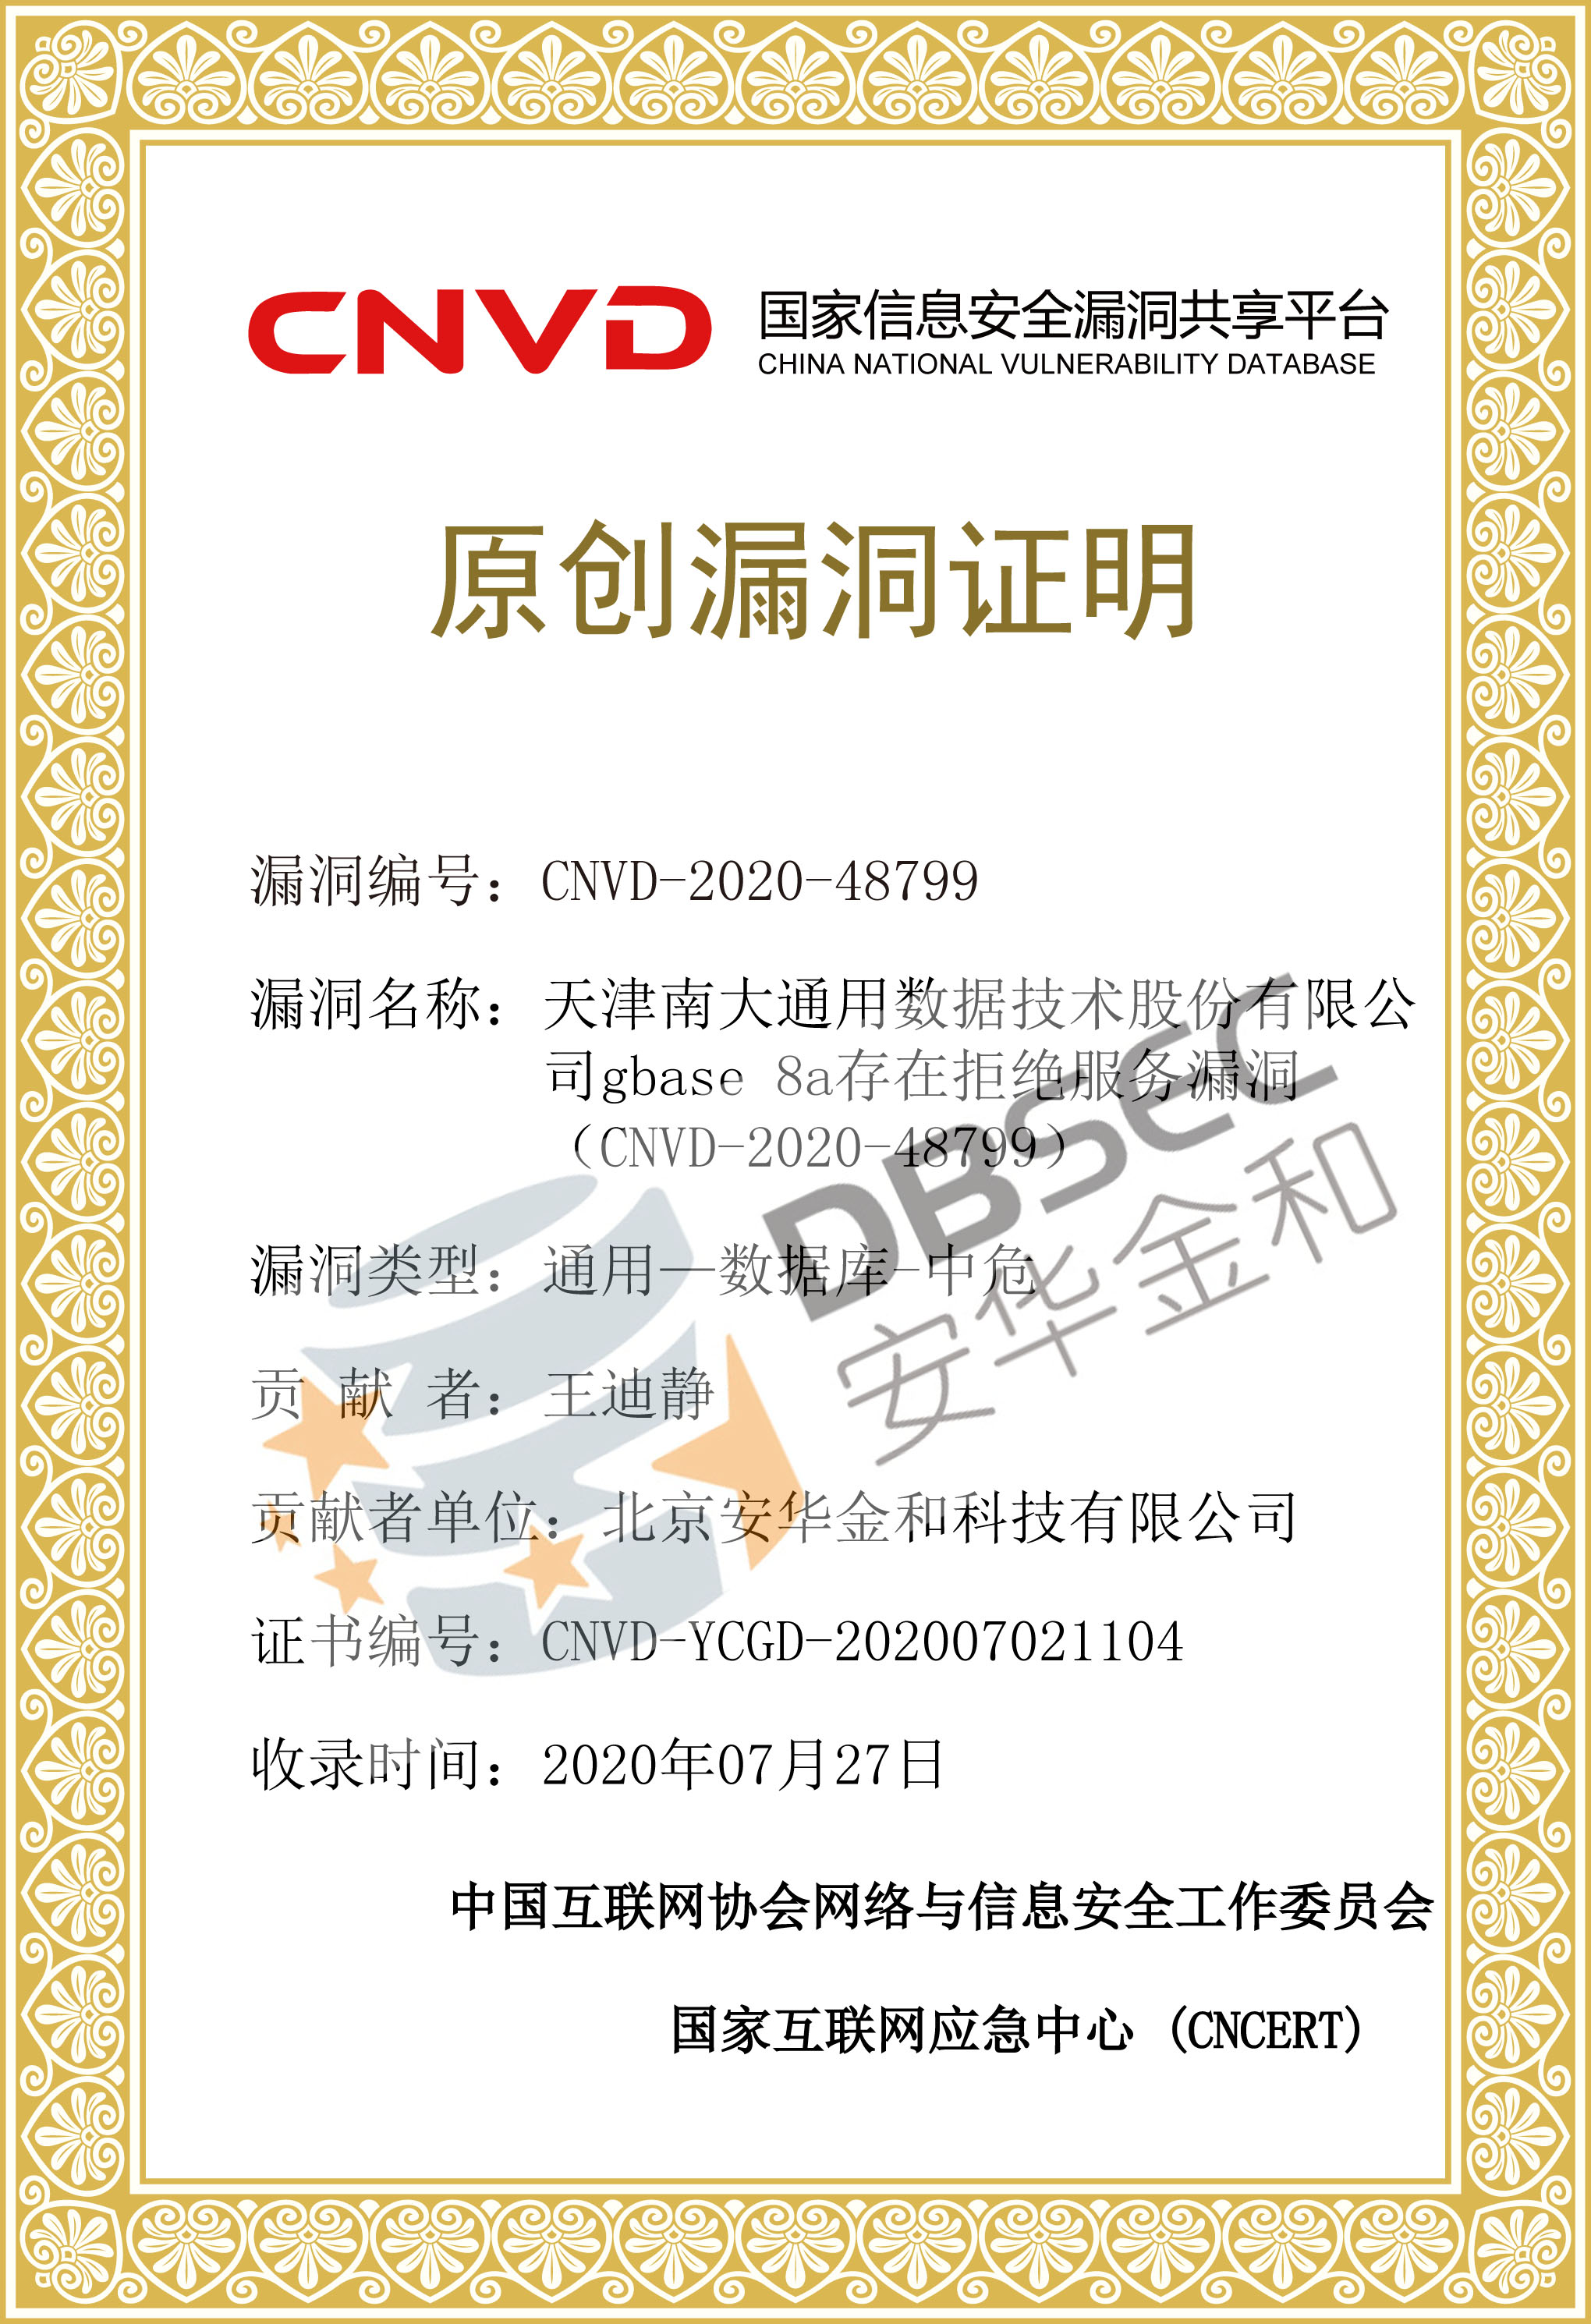 CNVD-YCGD-202007021104